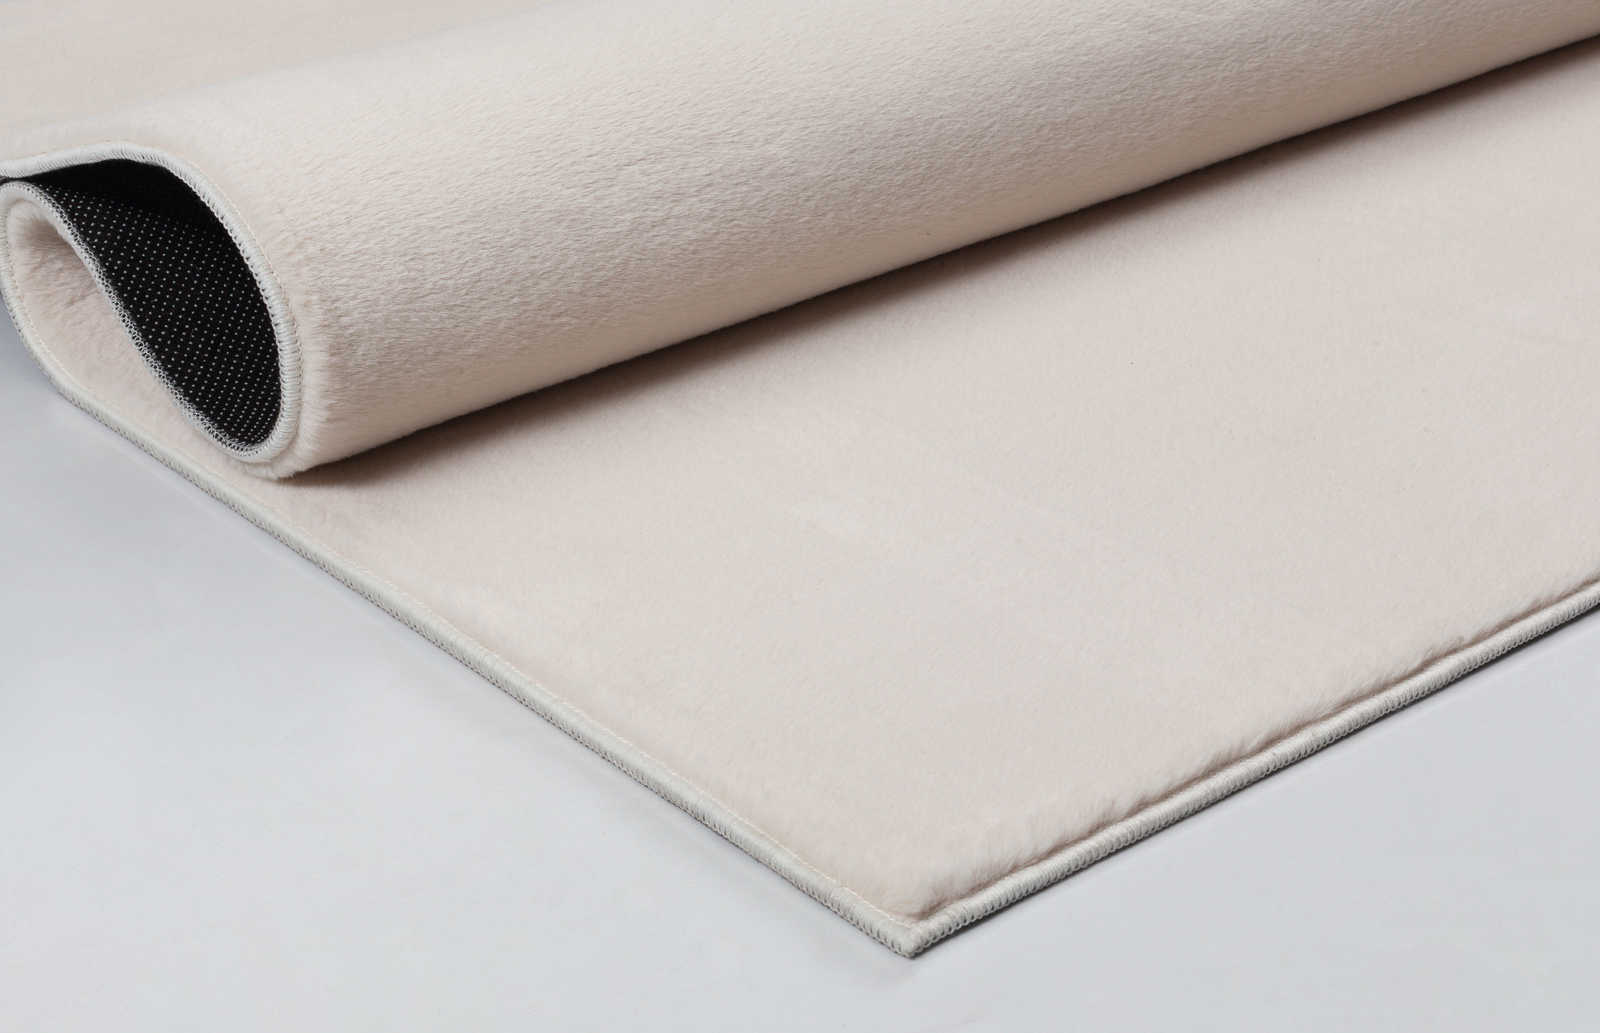             Plain high pile carpet in soft beige - 340 x 240 cm
        